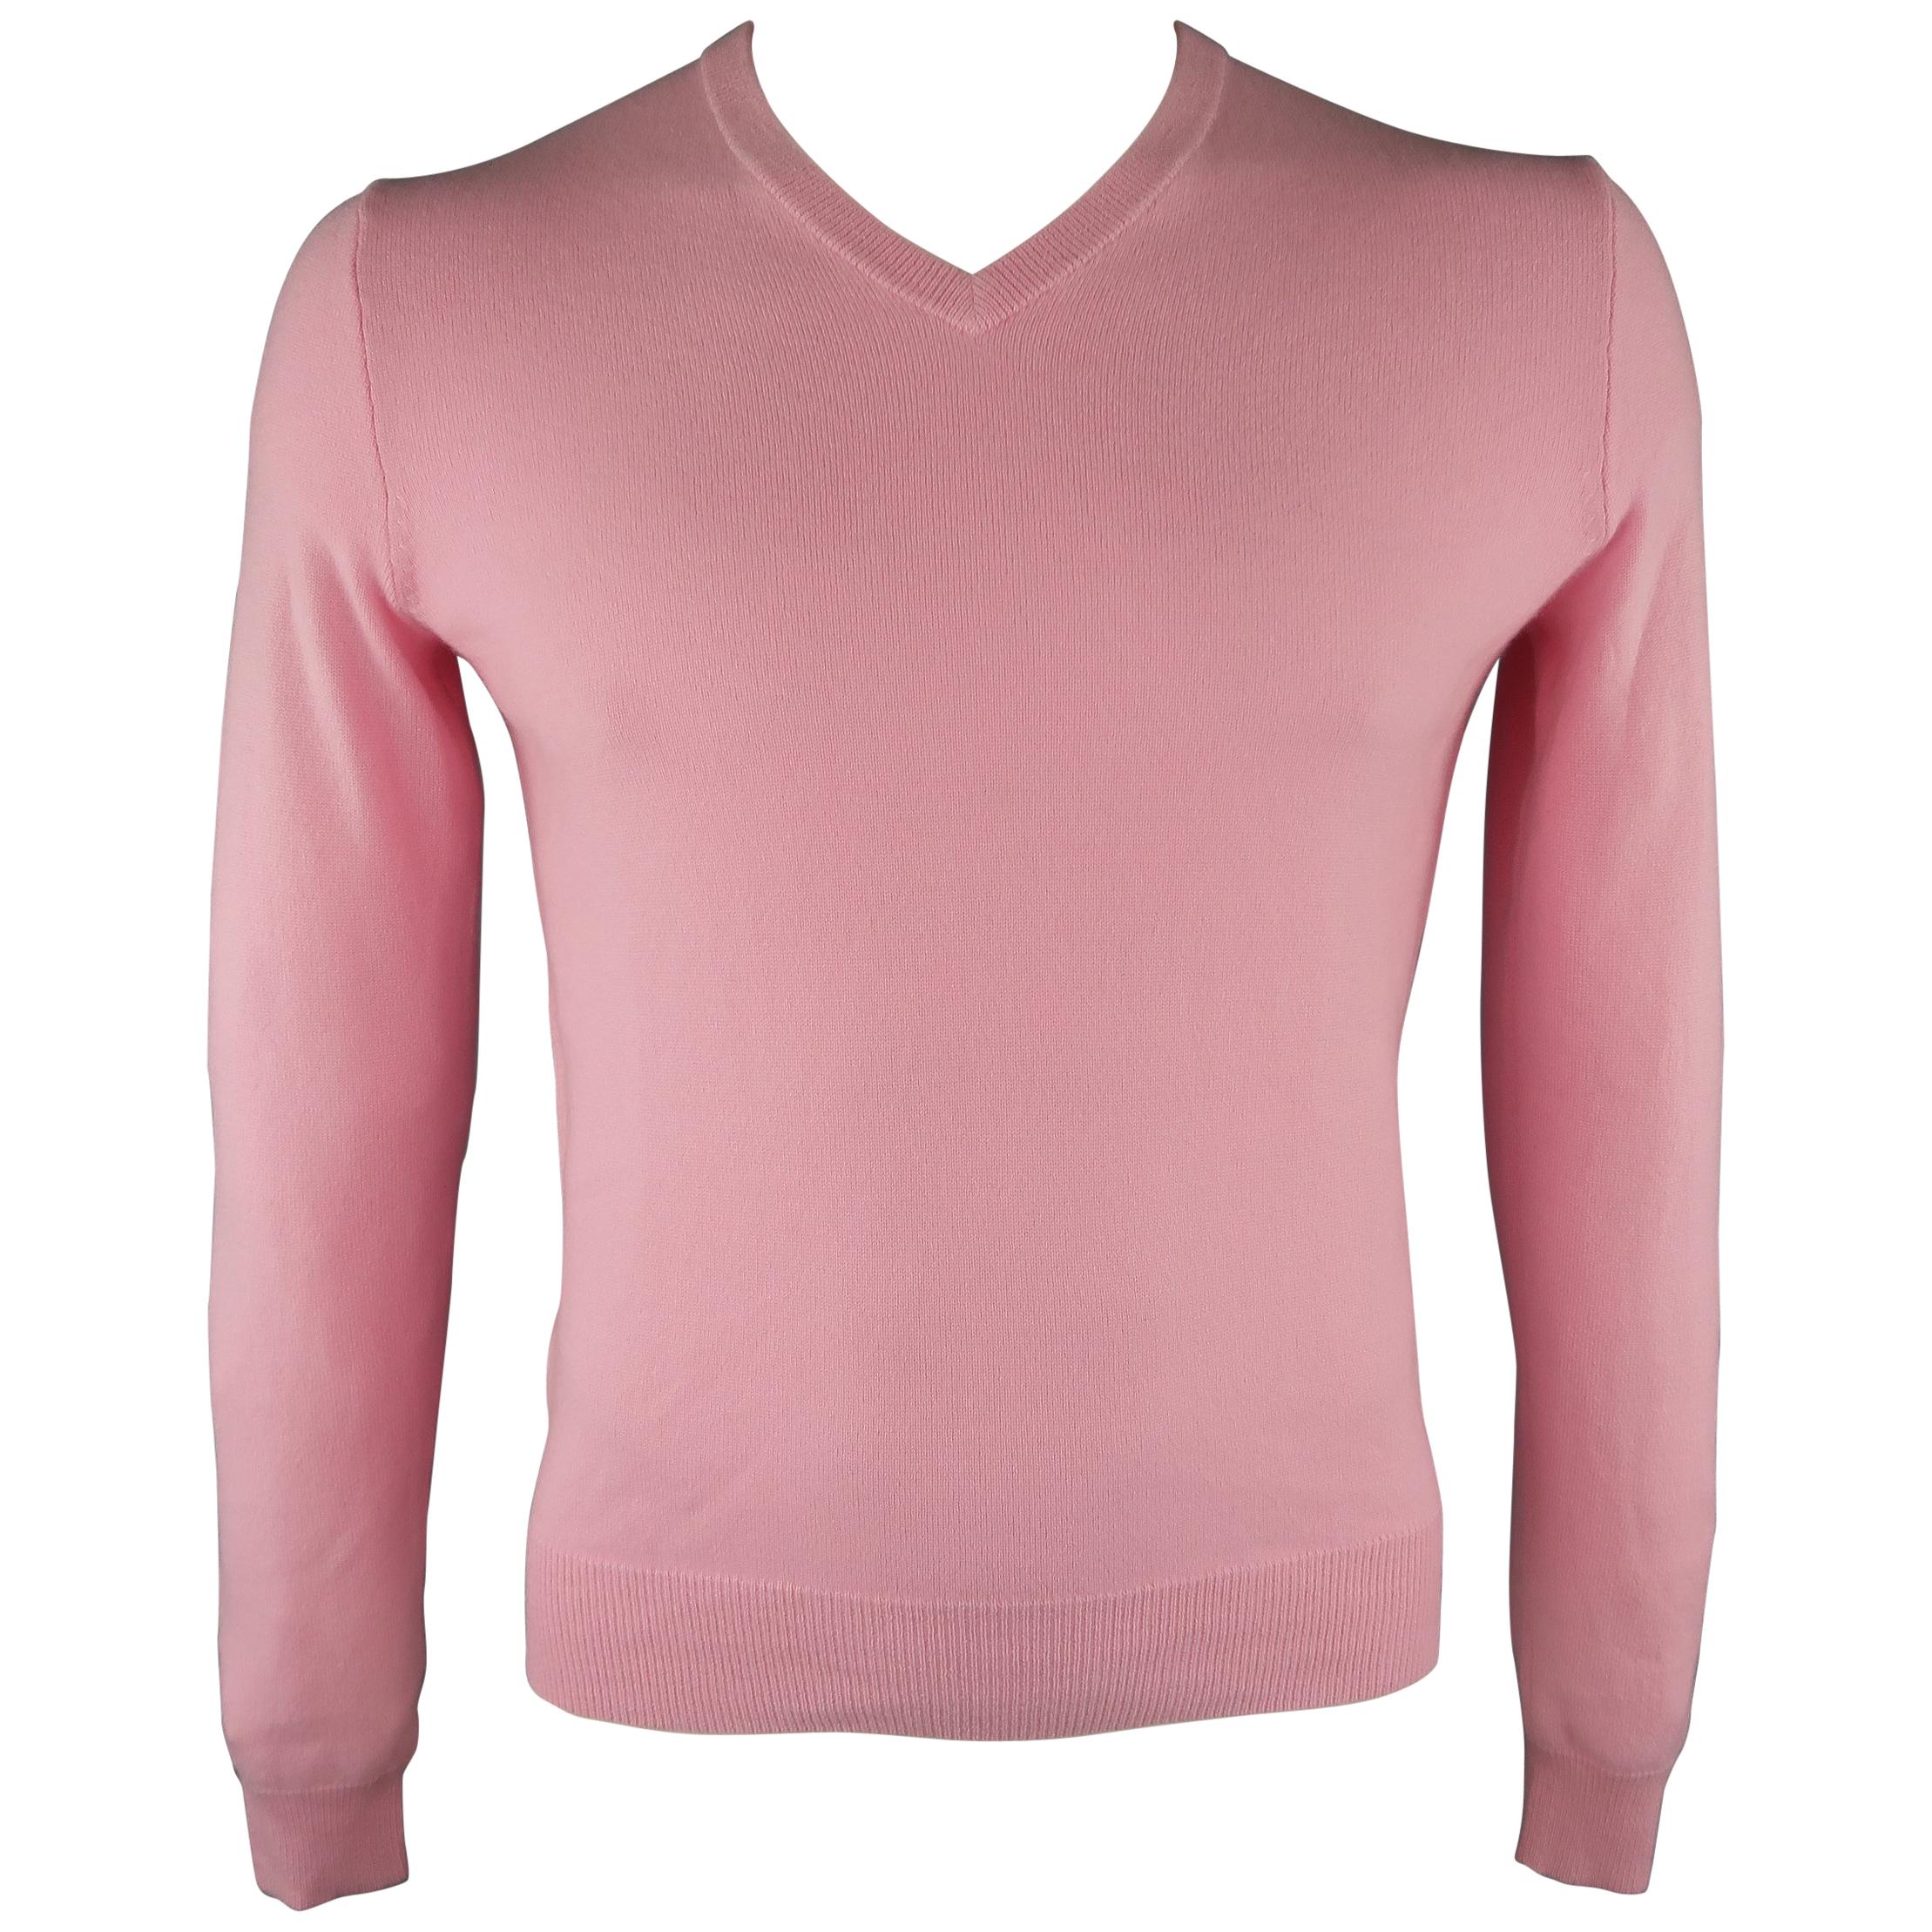 RALPH LAUREN Size M Light Pink Knitted Cashmere Sweater